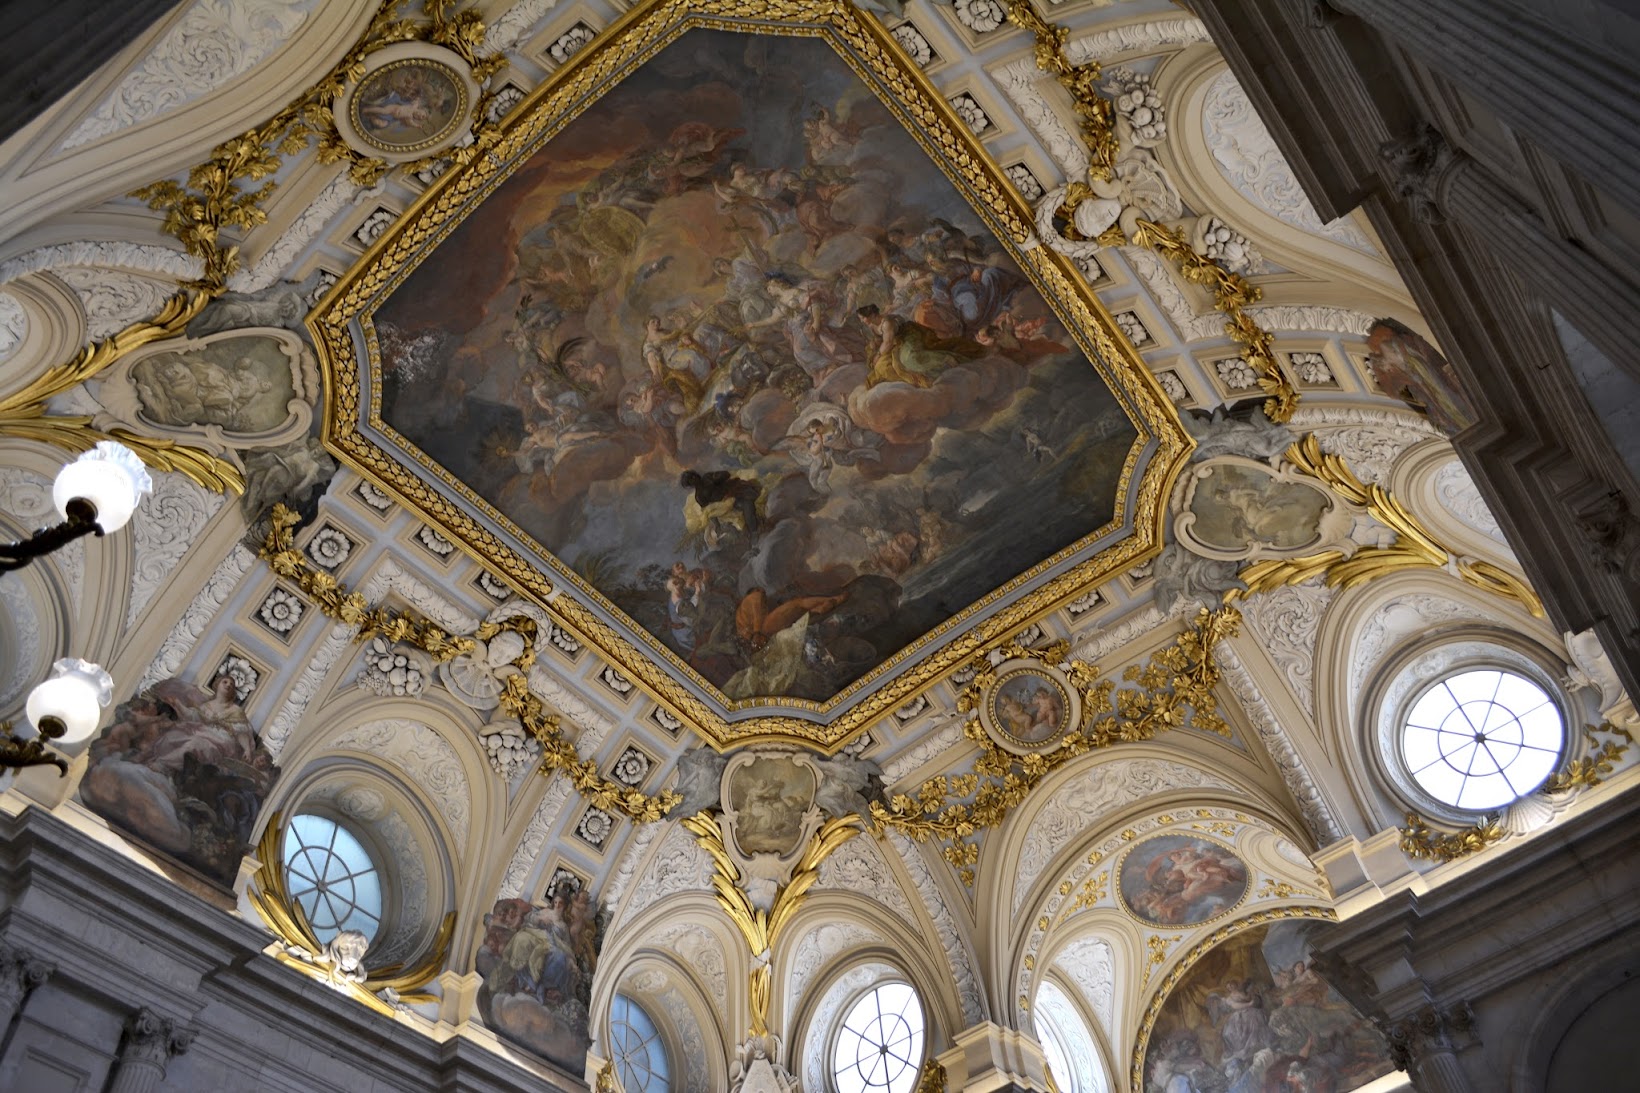 Palace frescos, Frescos del Palacio Real de Madrid, frescos